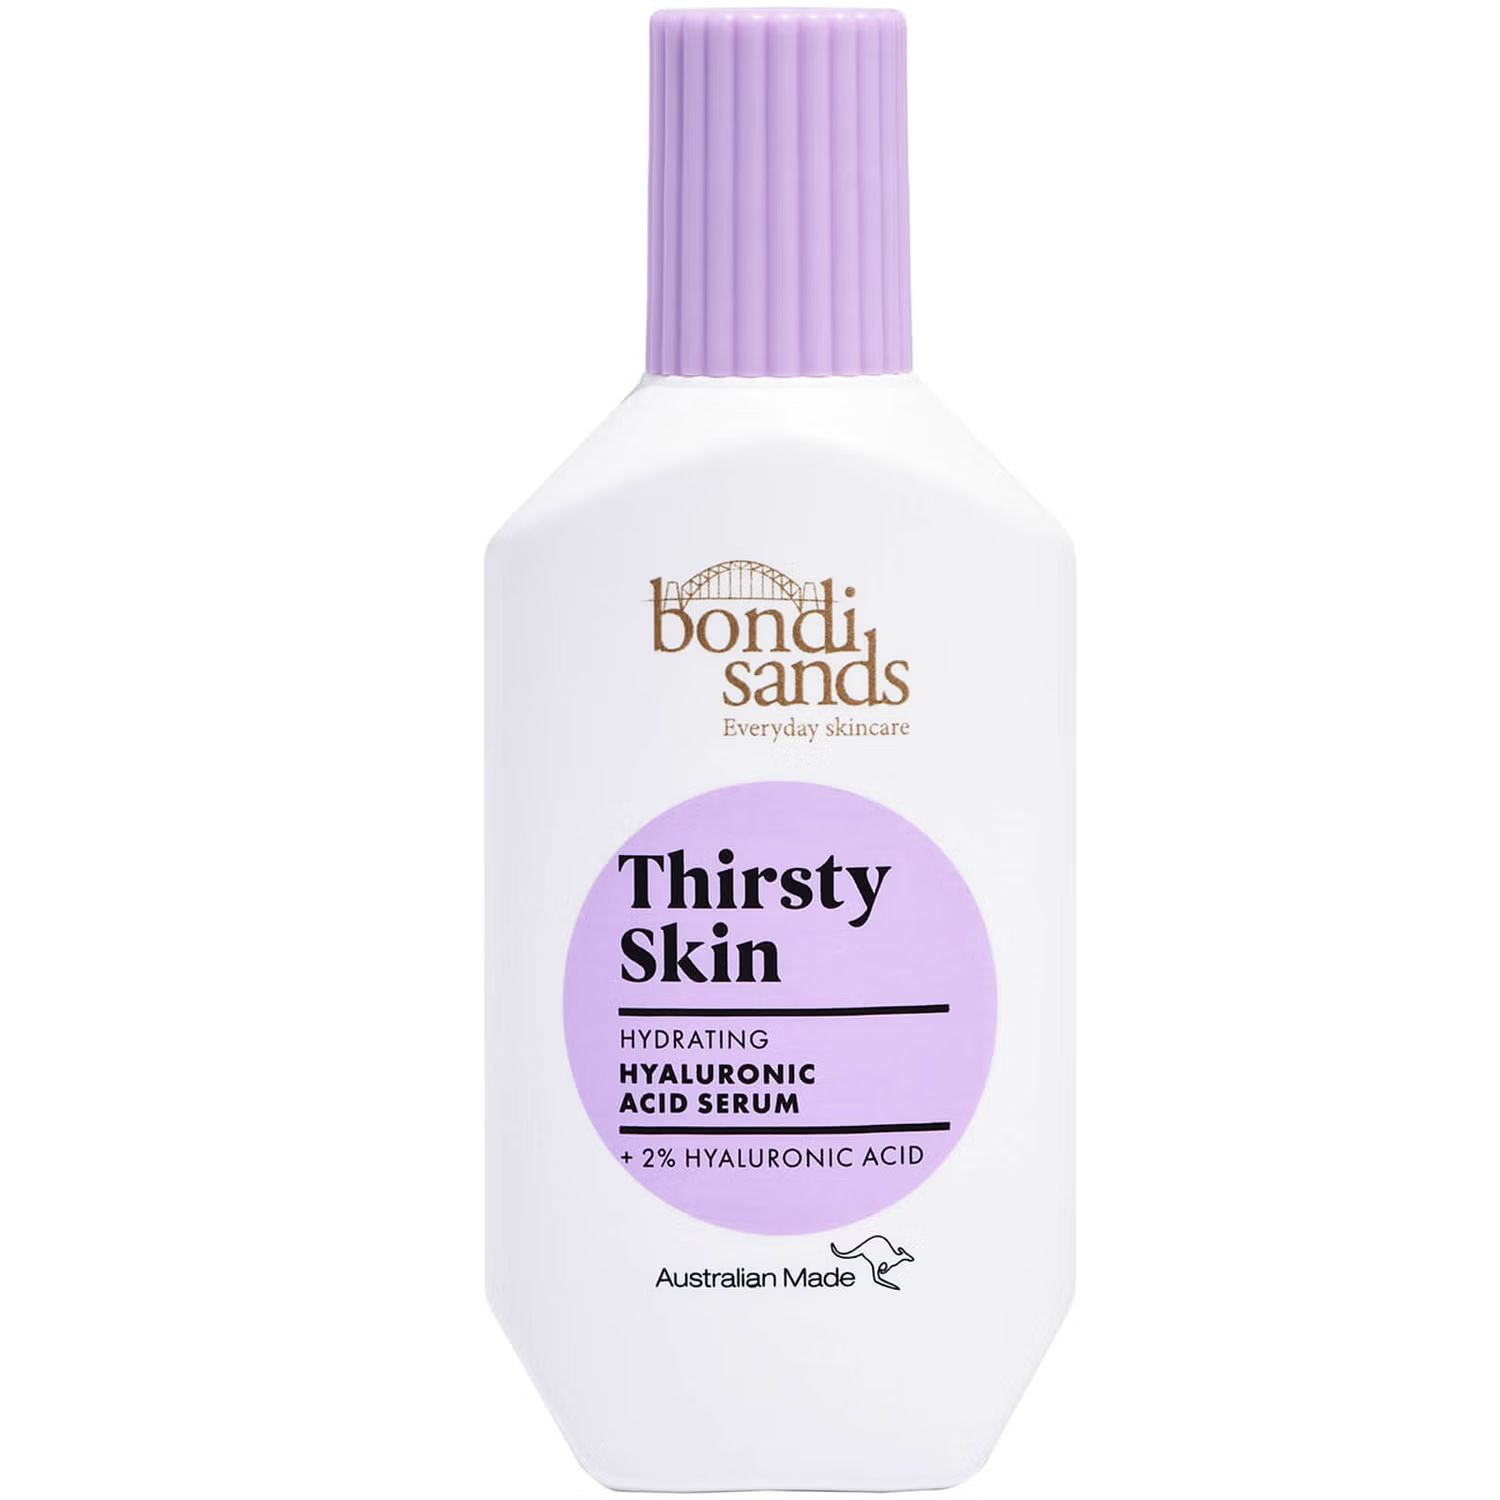 Bondi Sands Thirsty Skin Hyaluronic Acid Serum 30ml | Cult Beauty (Global)